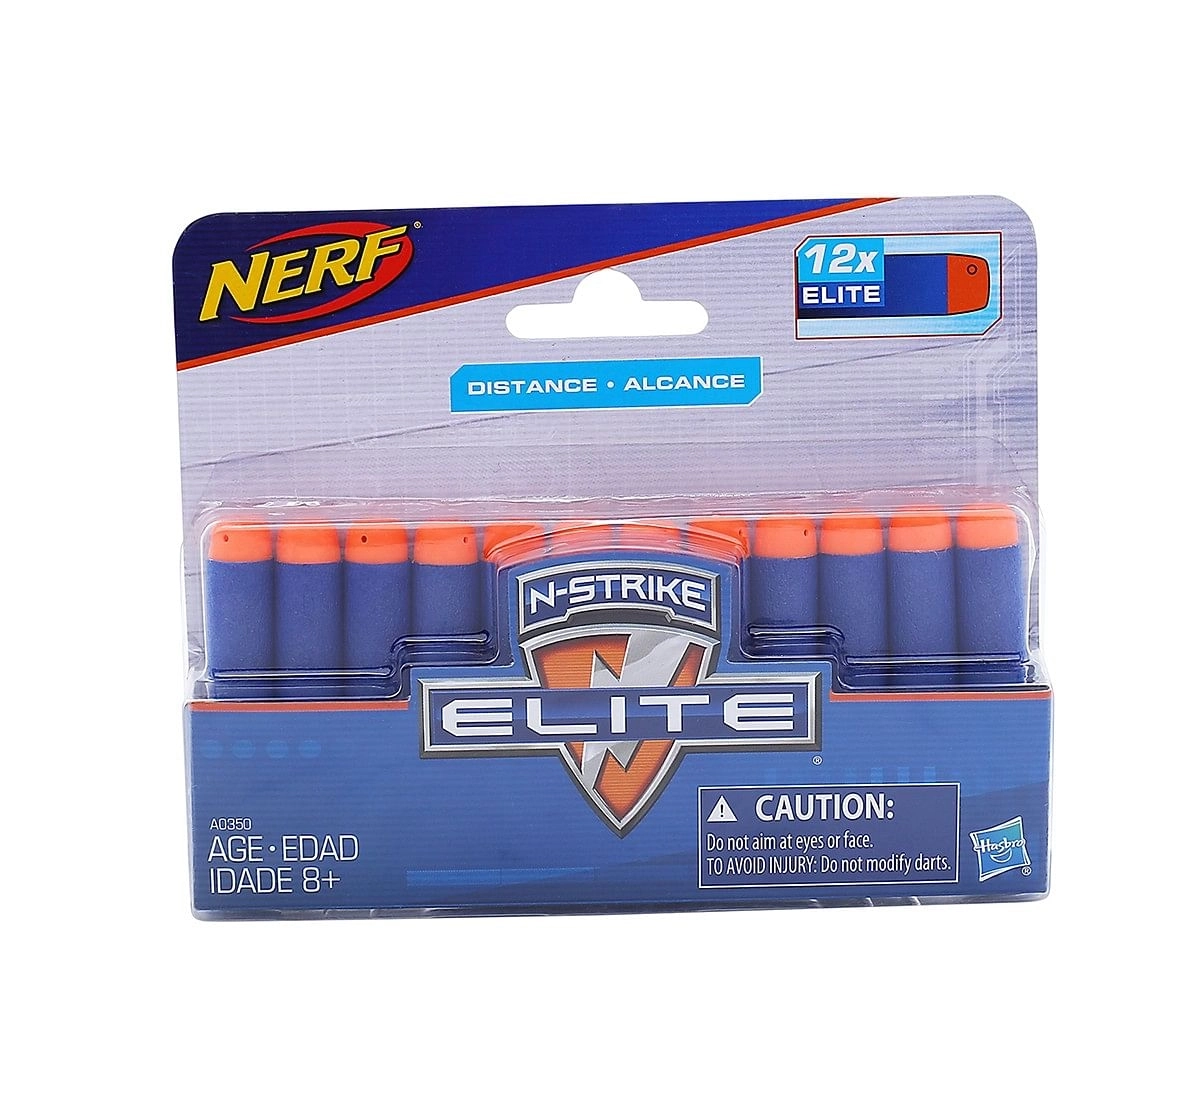 Nerf N-Strike Elite 12 Dart Refill Target Games and Darts for Kids age 8Y+ (Blue)